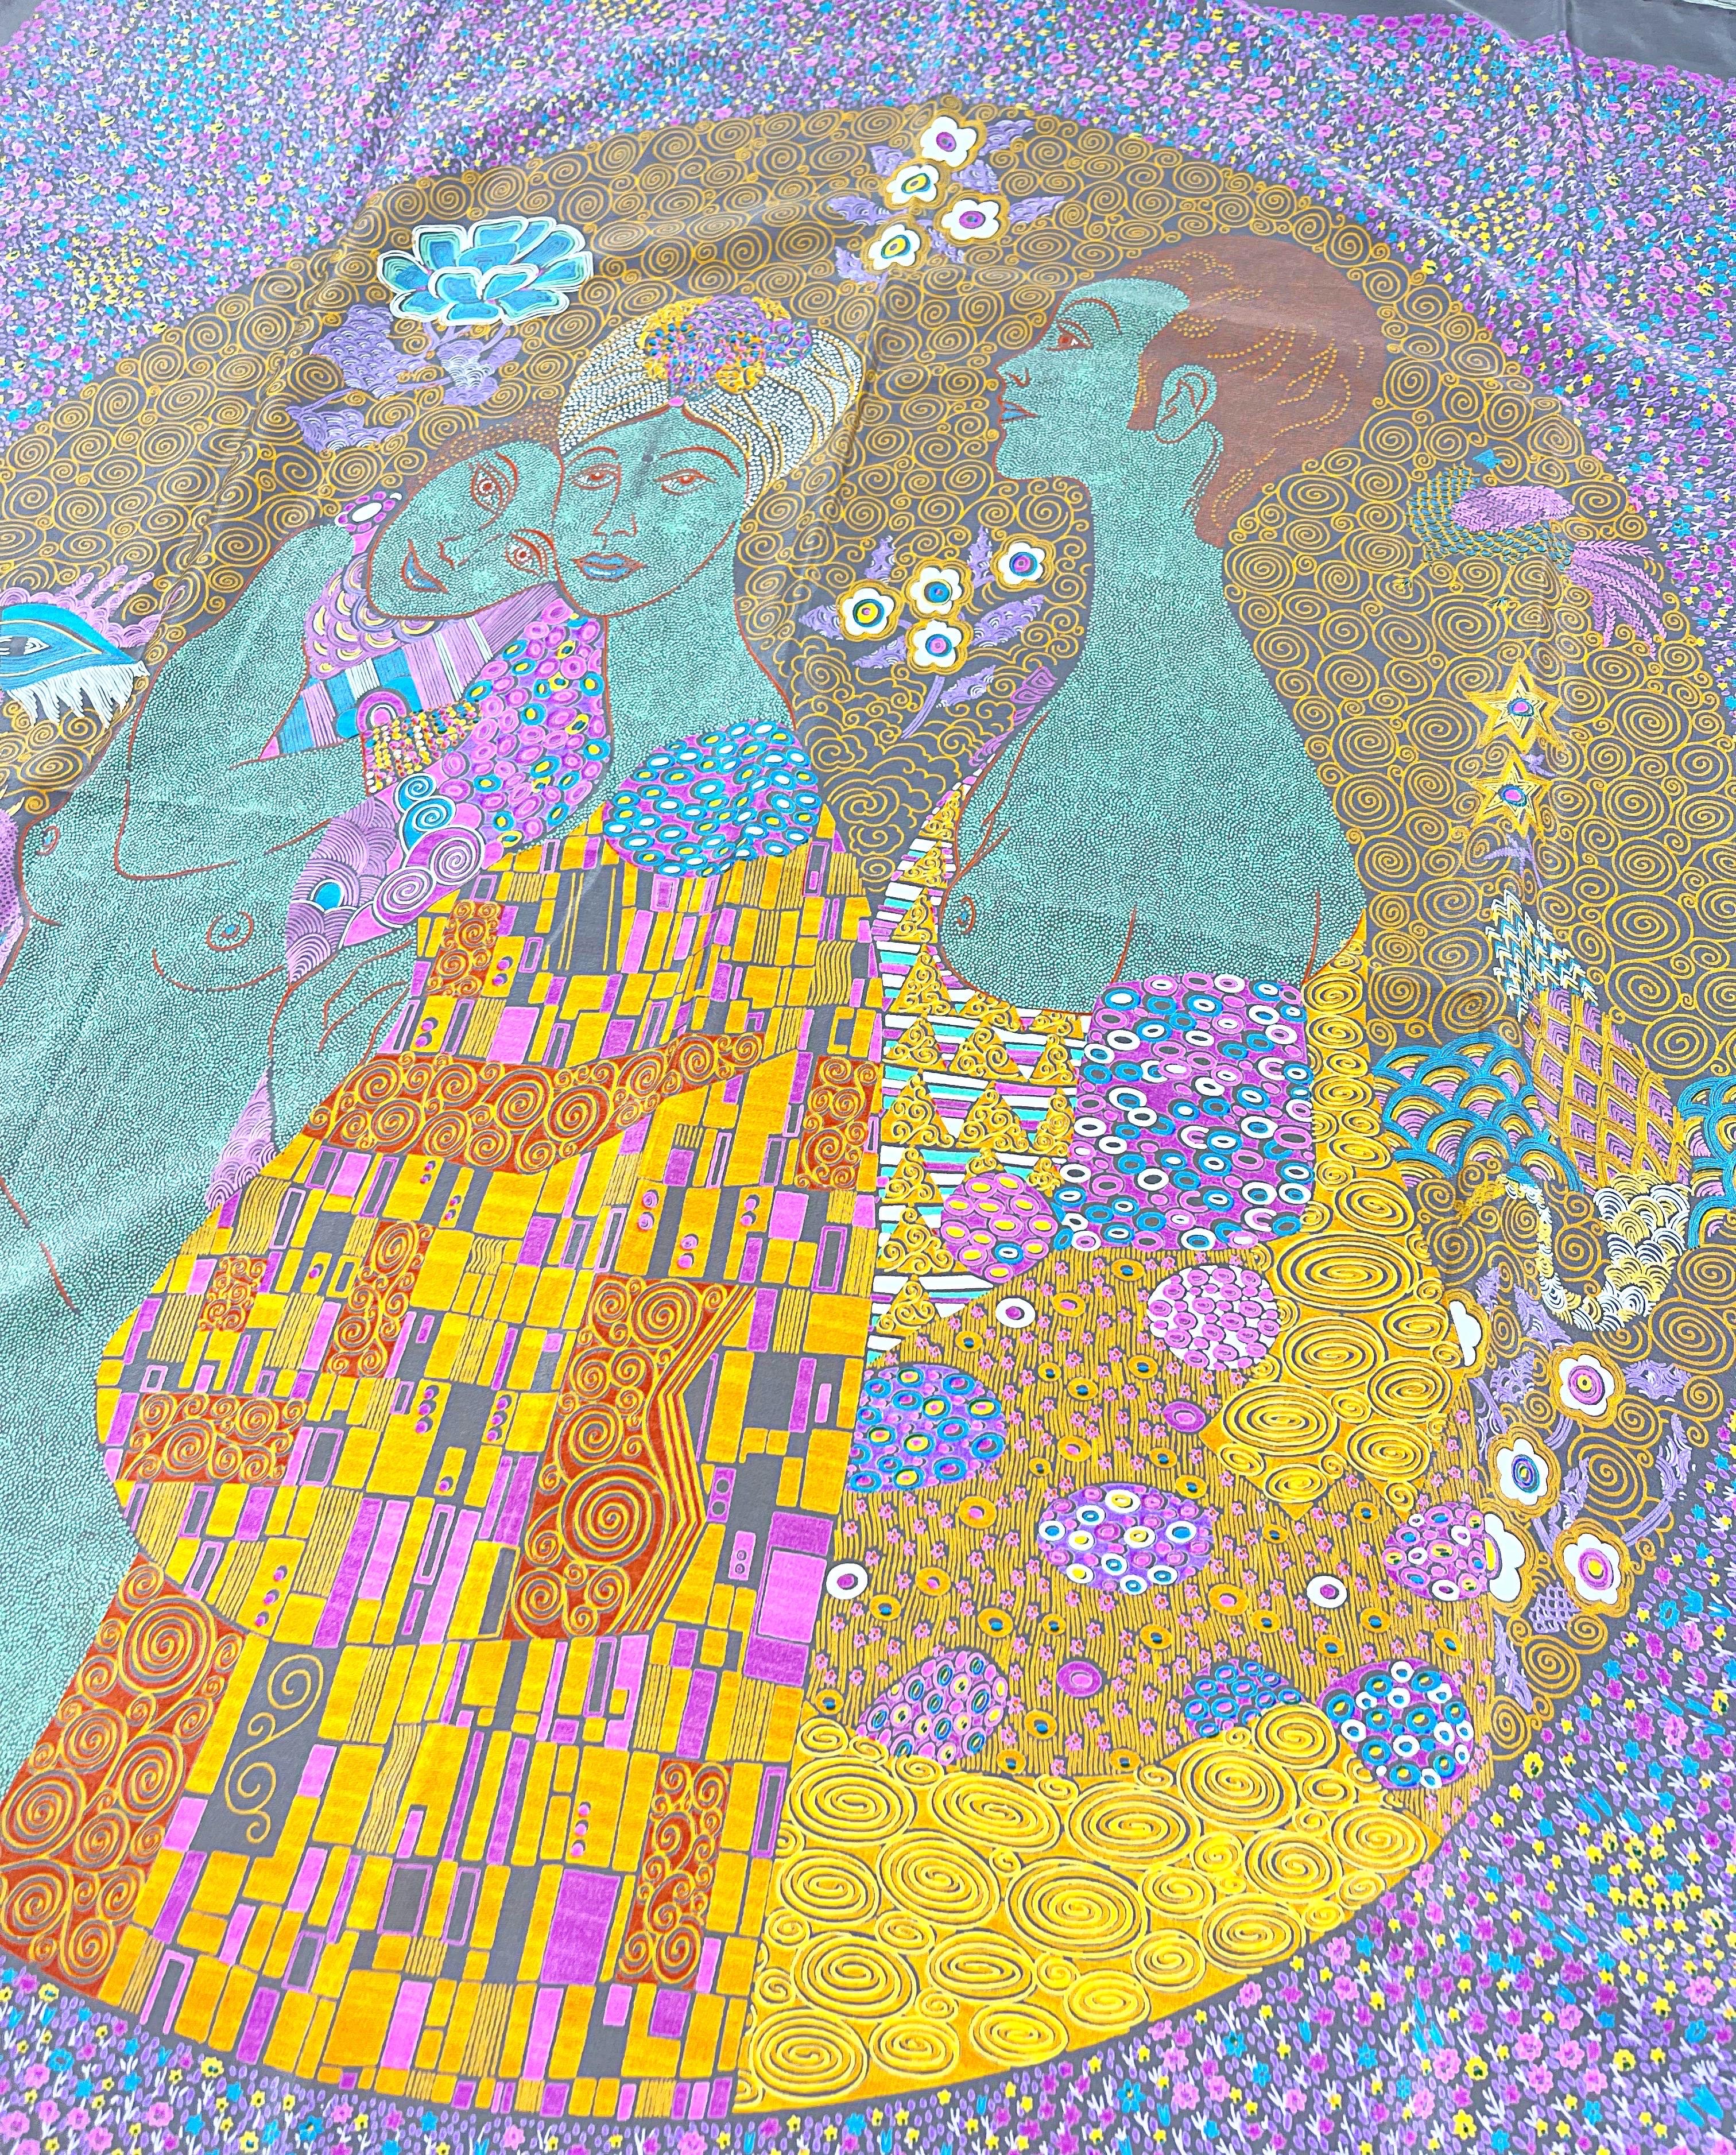 Amazing vintage Bottega Veneta Klimt inspired large silk scarf from 1981. Incredible Gustav Klimt art nouveau inspired print featuring dainty pointillist details. Vibrant colors of purple, pink, orange, green, turquoise blue and brown throughout.